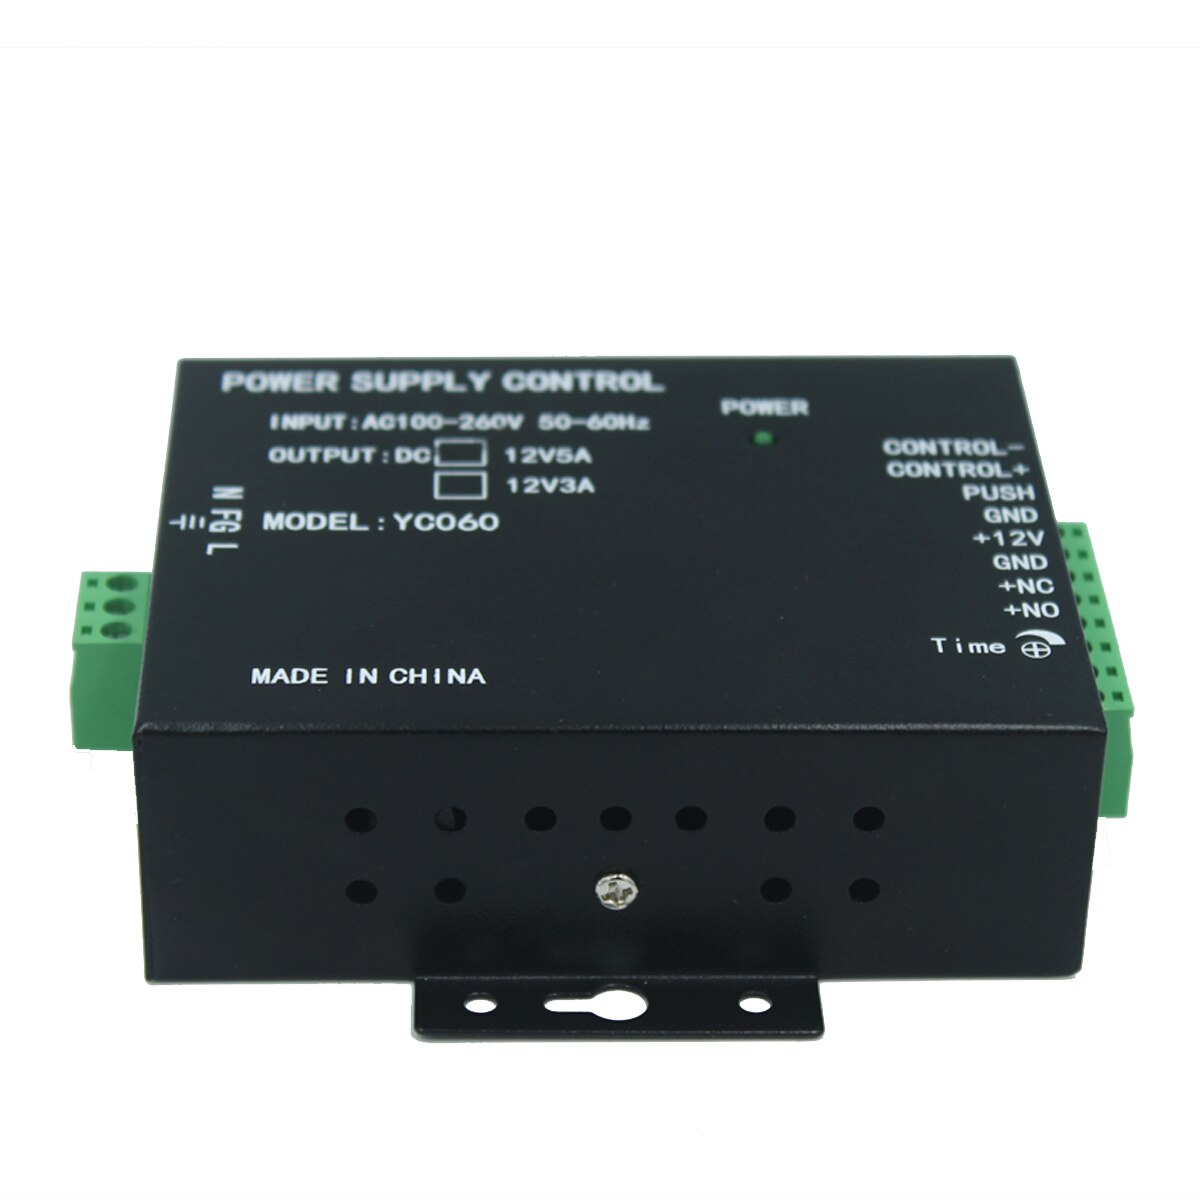 Mini Energie Versorgung Tür RFID Fingerabdruck Zugriff Kontrolle Lieferant Adapter Konverter System Maschine DC 12V 3A 5A AC 100 ~ 260V